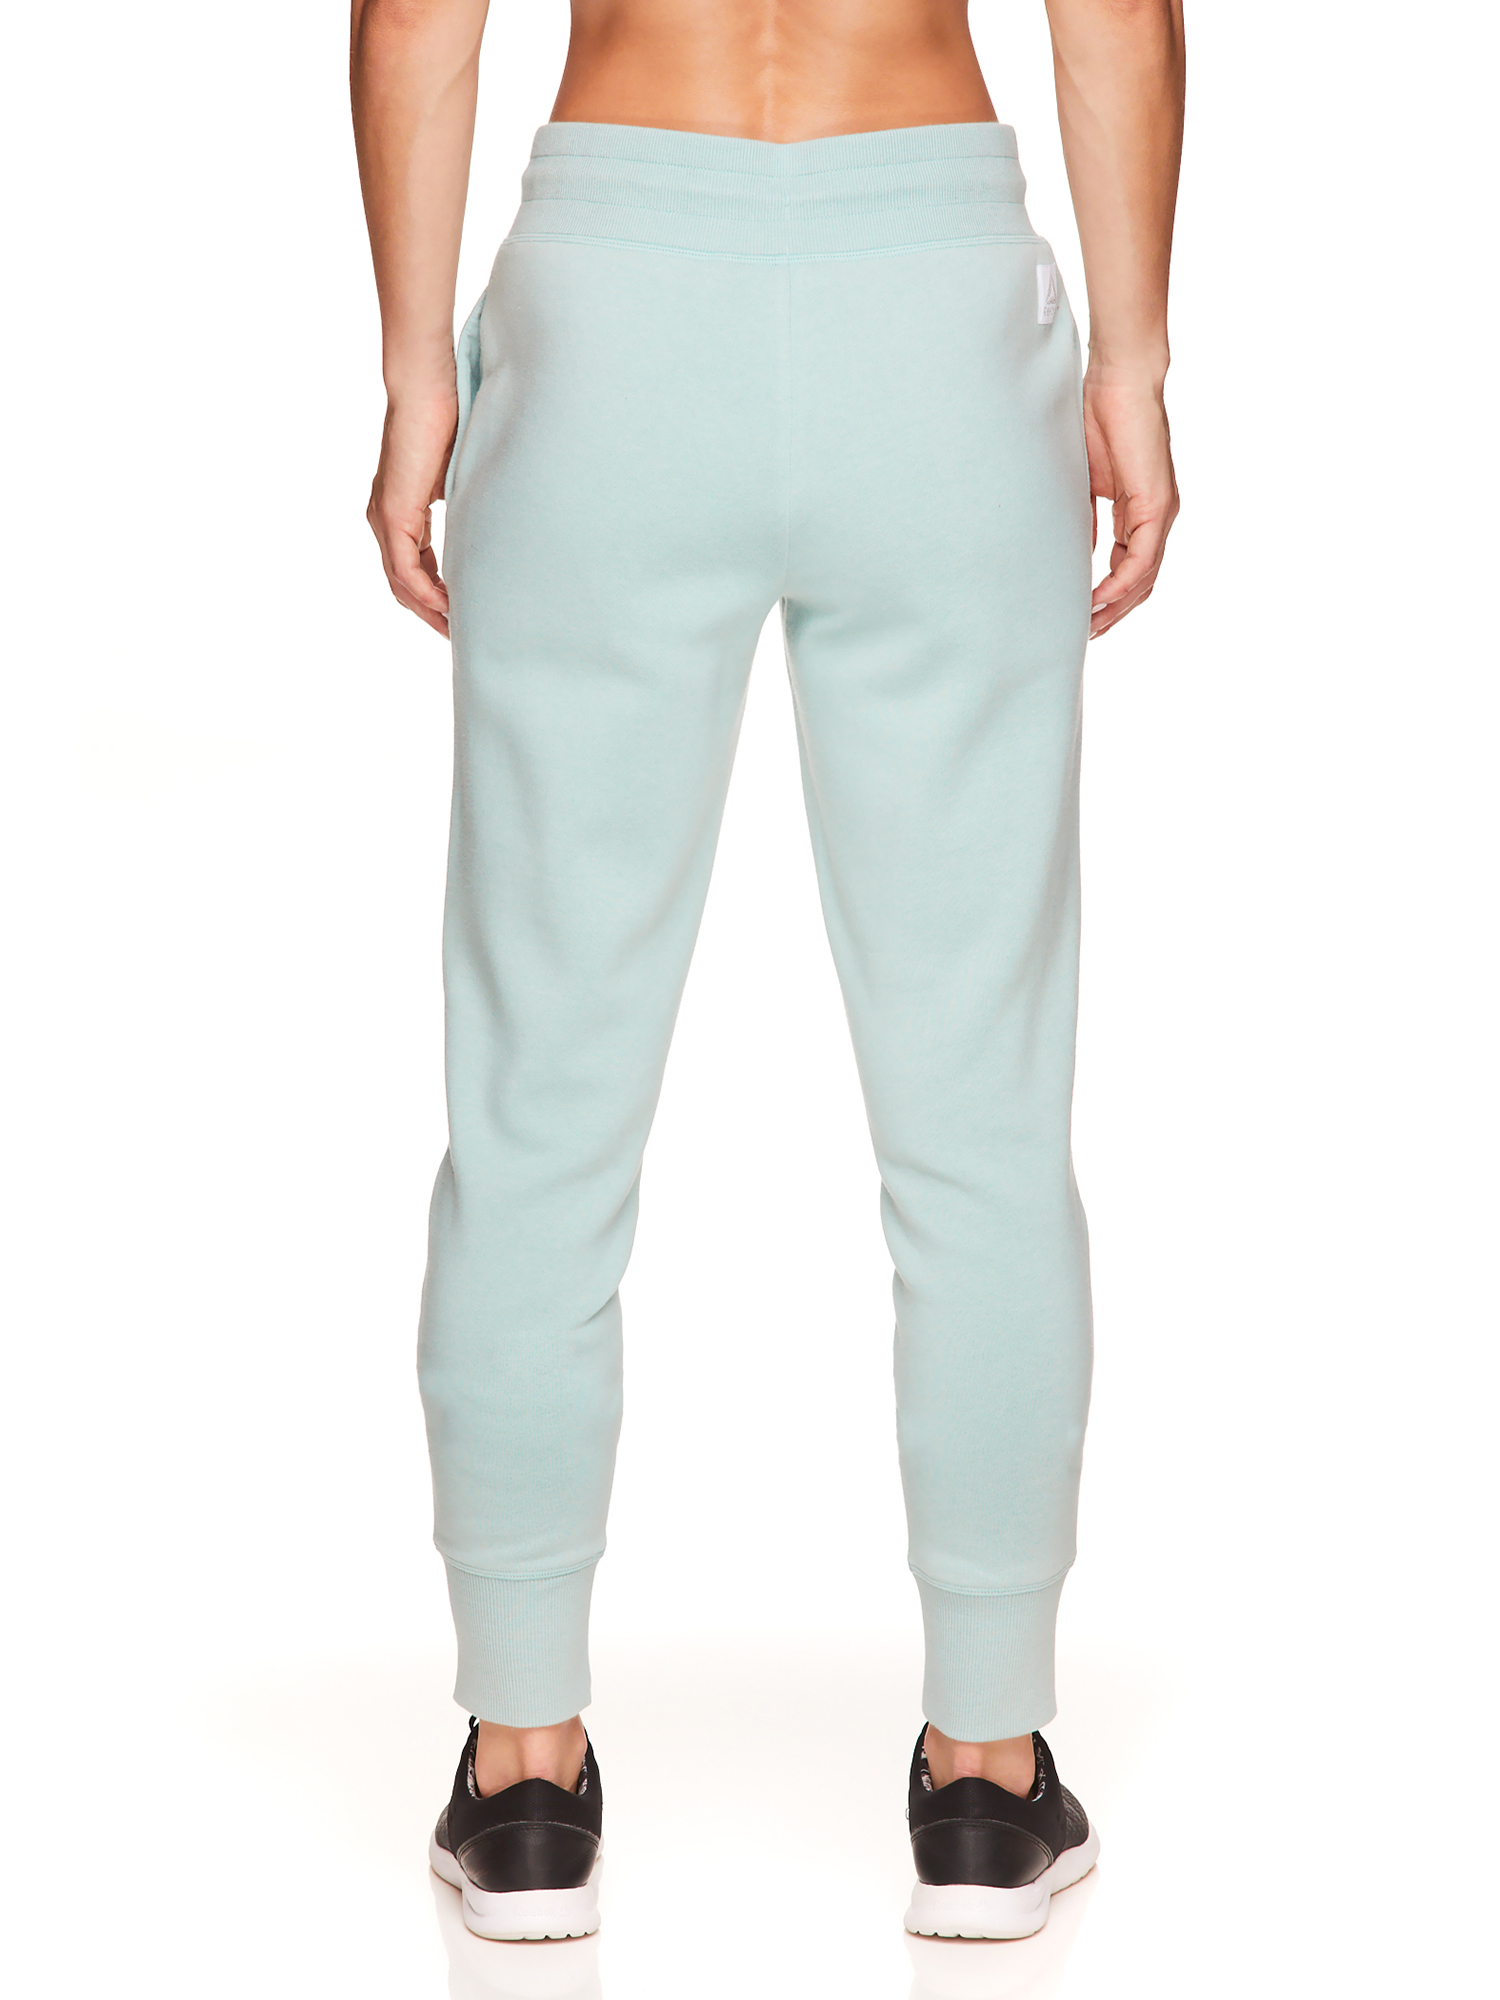 Reebok Womens' Cozy Fleece Jogger Sweatpants with Pockets - image 4 of 4